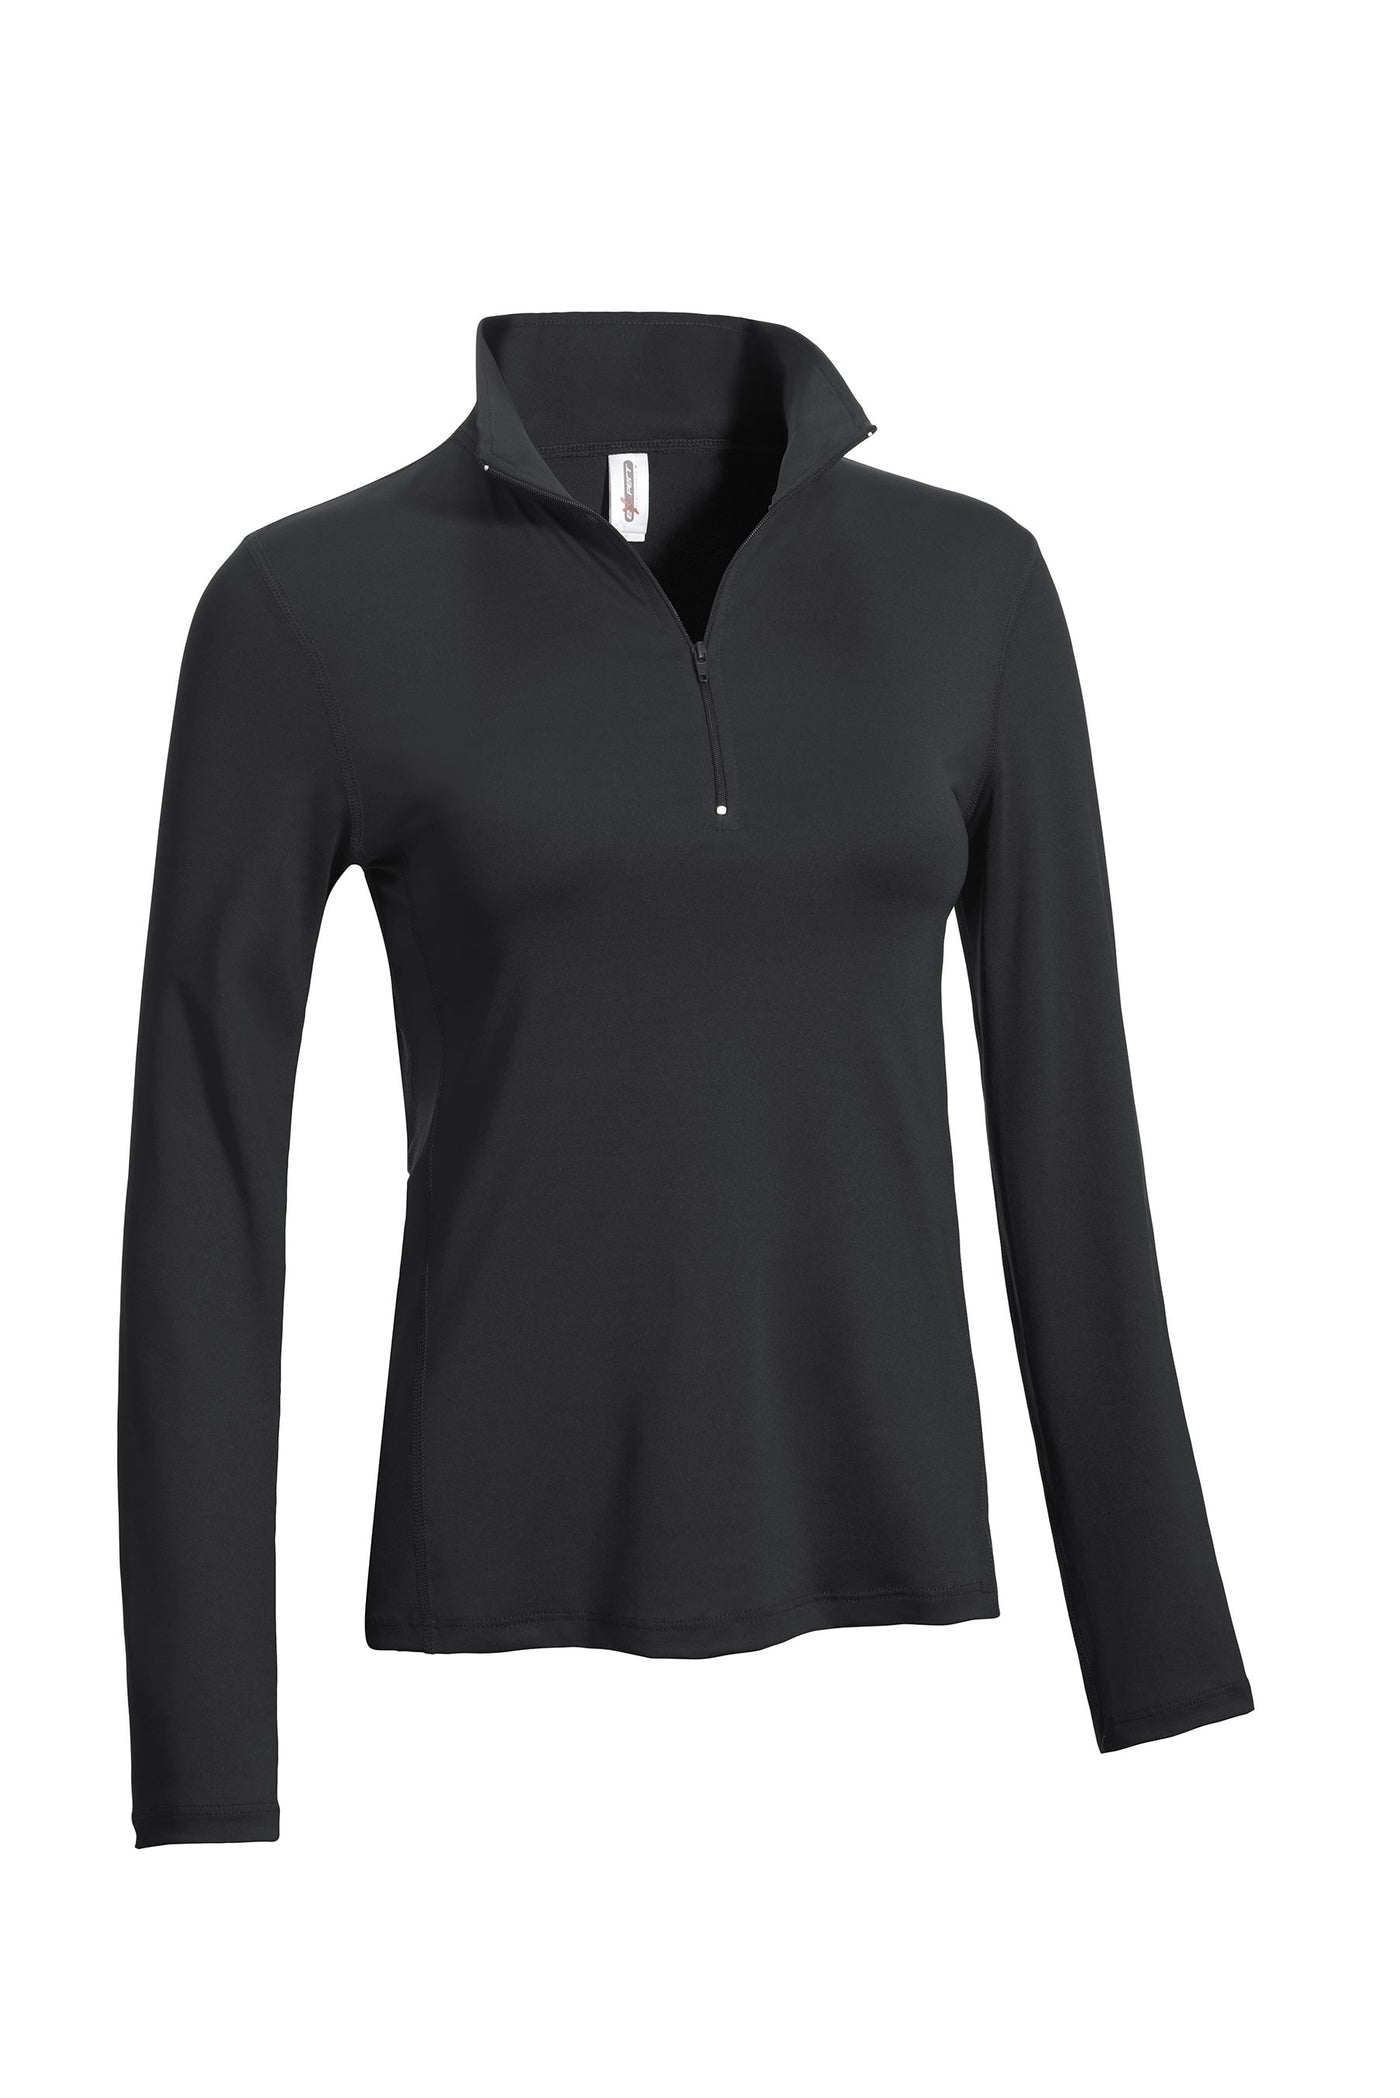 Expert Apparel Women's Quarter Zip Training Pullover Top Black#color_black